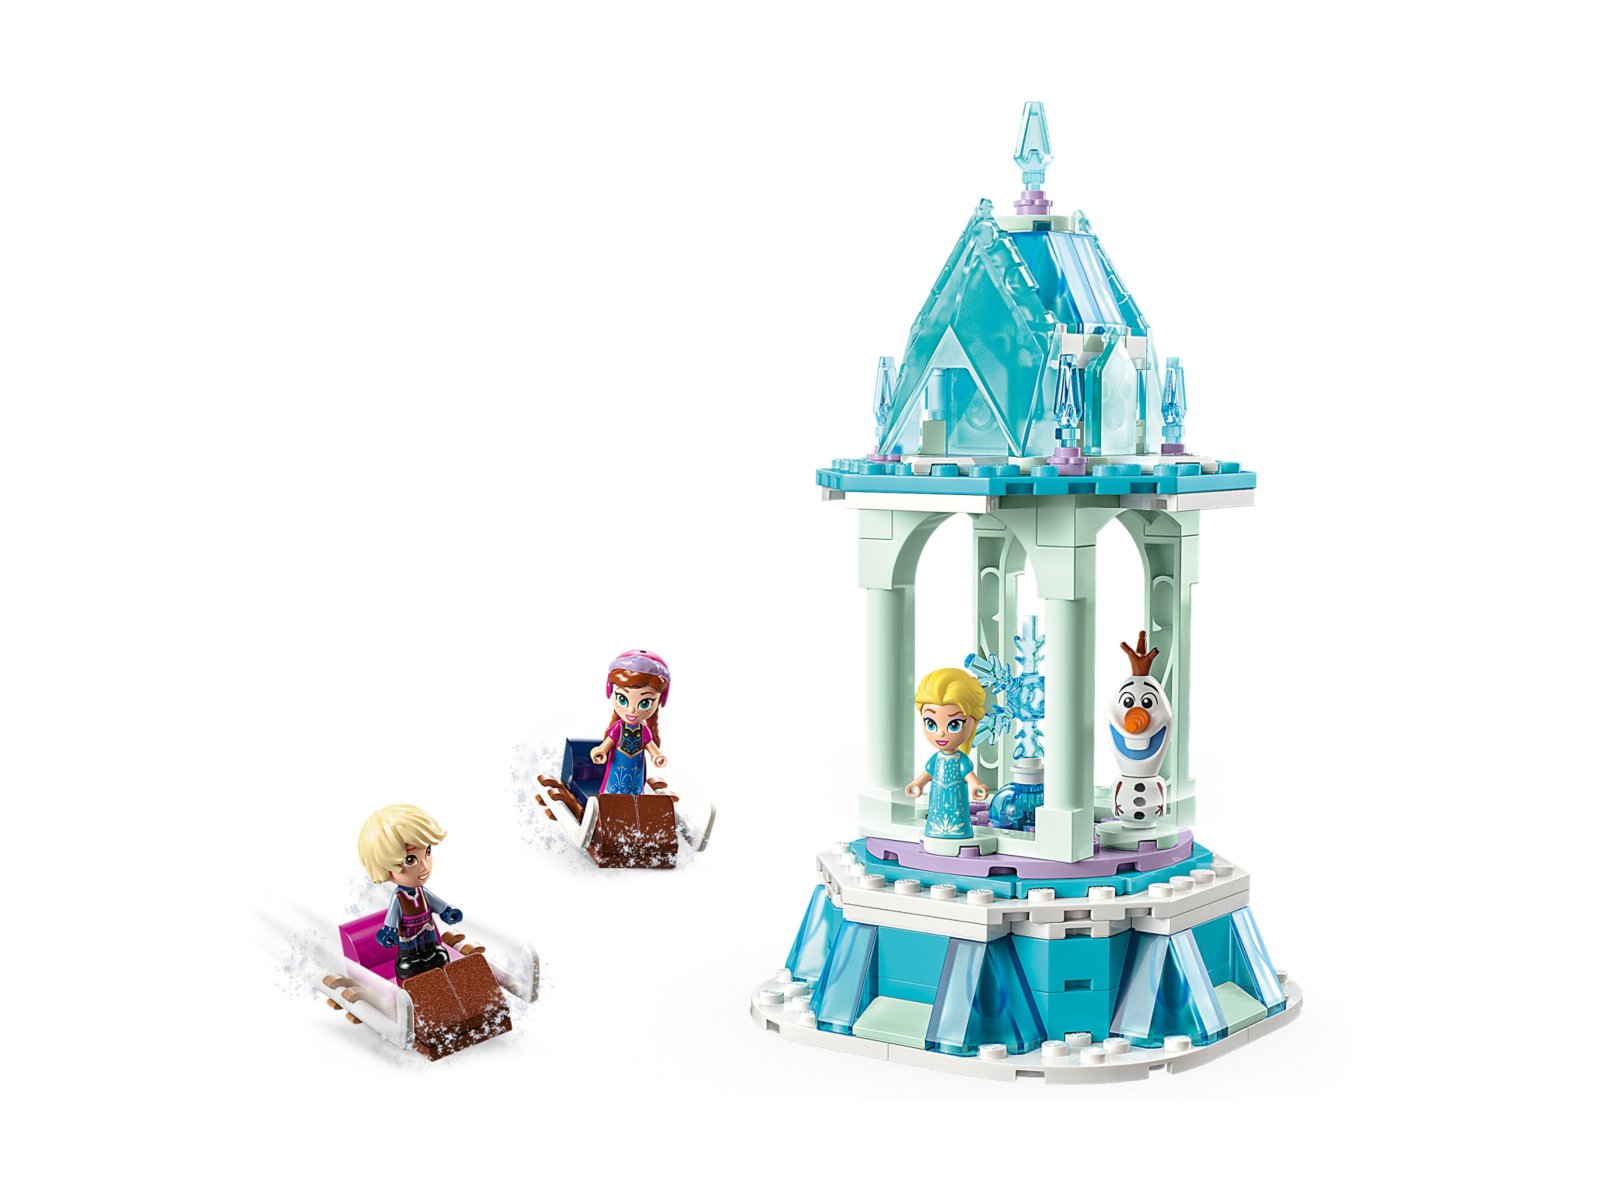 LEGO 43218 Disney Magiczna karuzela Anny i Elzy